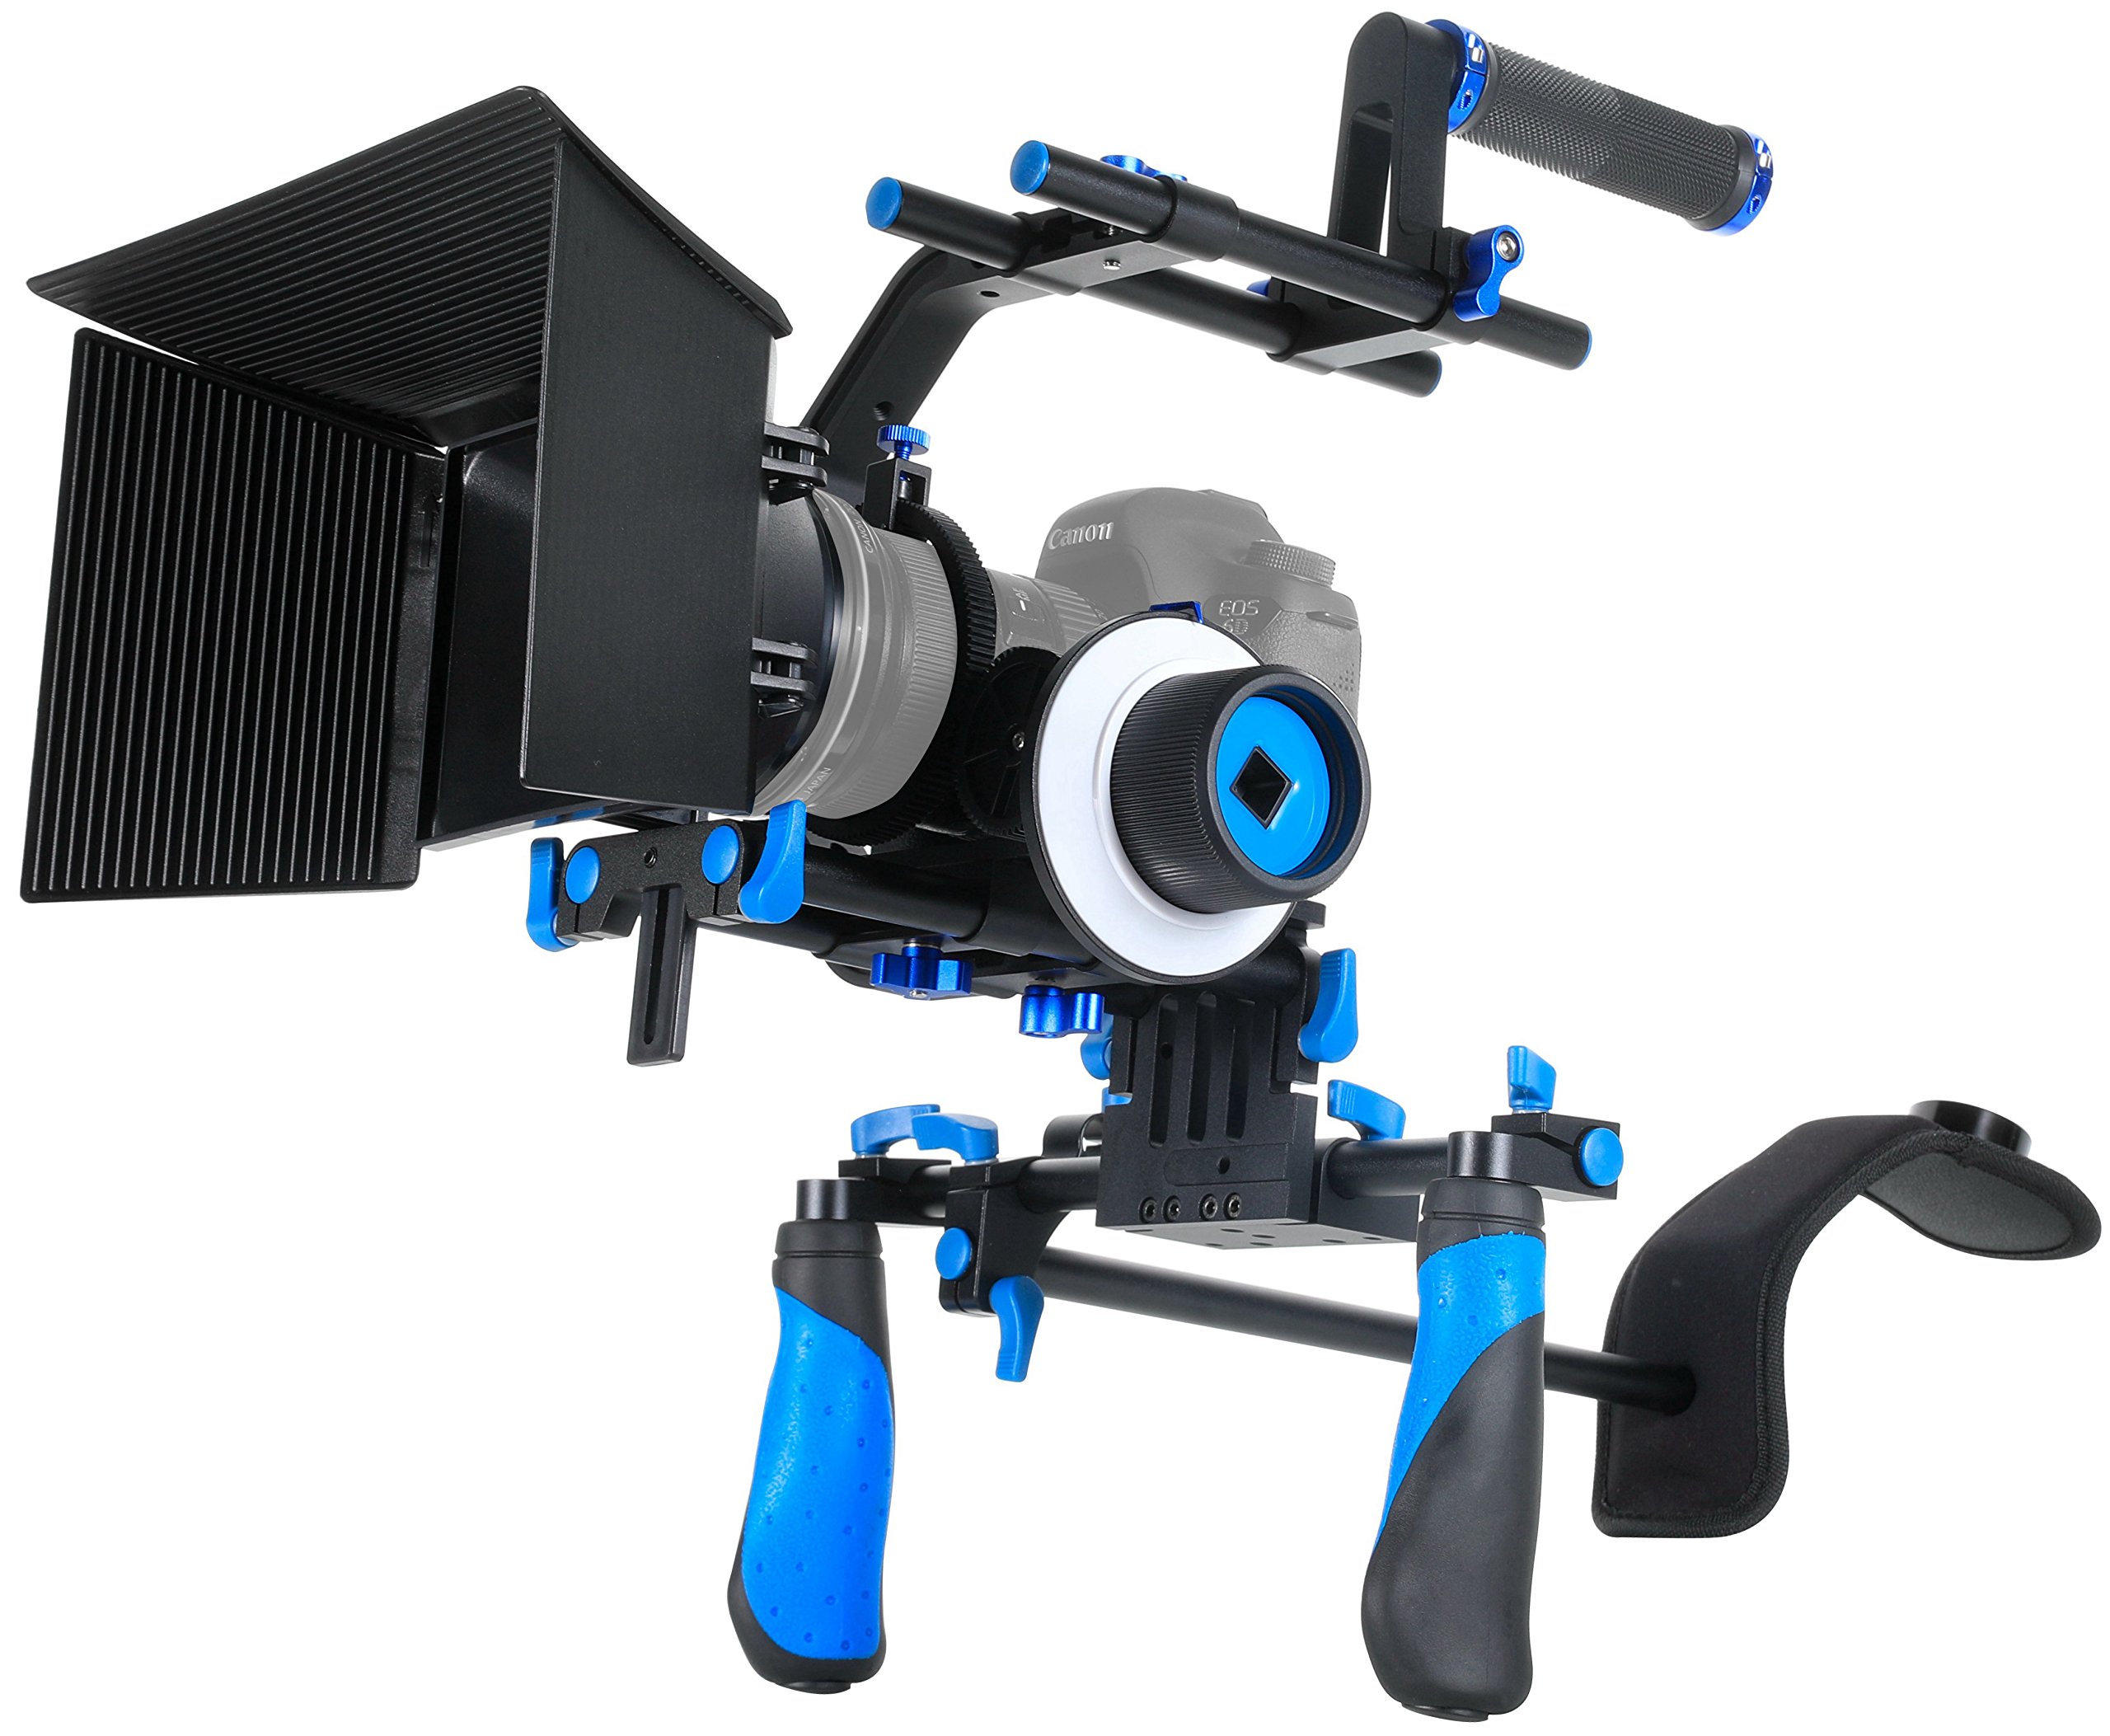 MARSRE DSLR Shoulder Rig Film Making Kit with Follow Focus, Matte Box, Pro C-Shape Cage Mounting Bracket and Top Handle for All DSLR Video Cameras ...